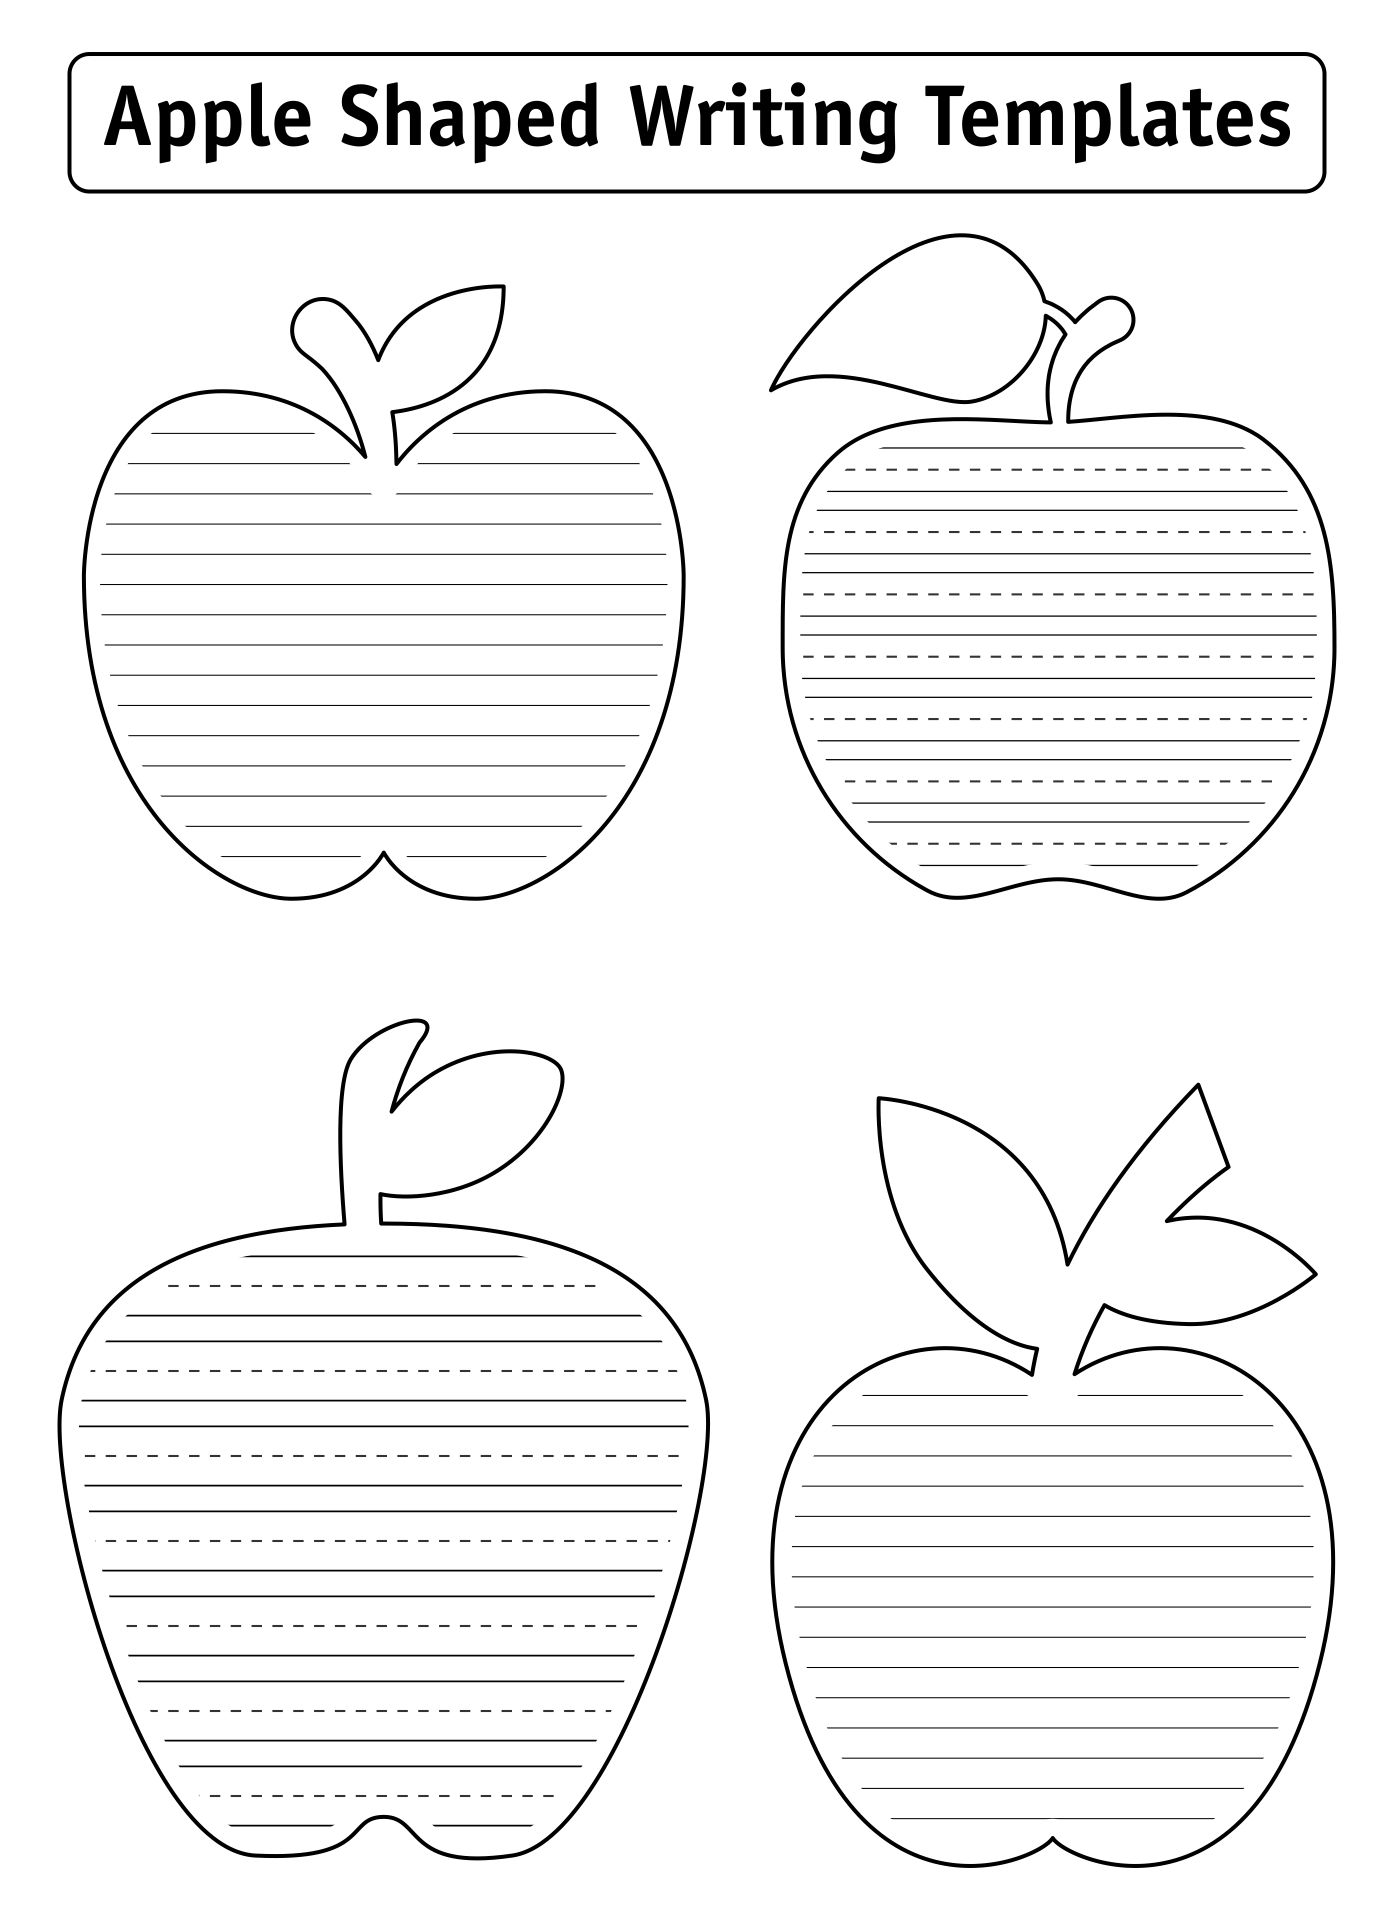 Printable Apple-Shaped Writing Templates